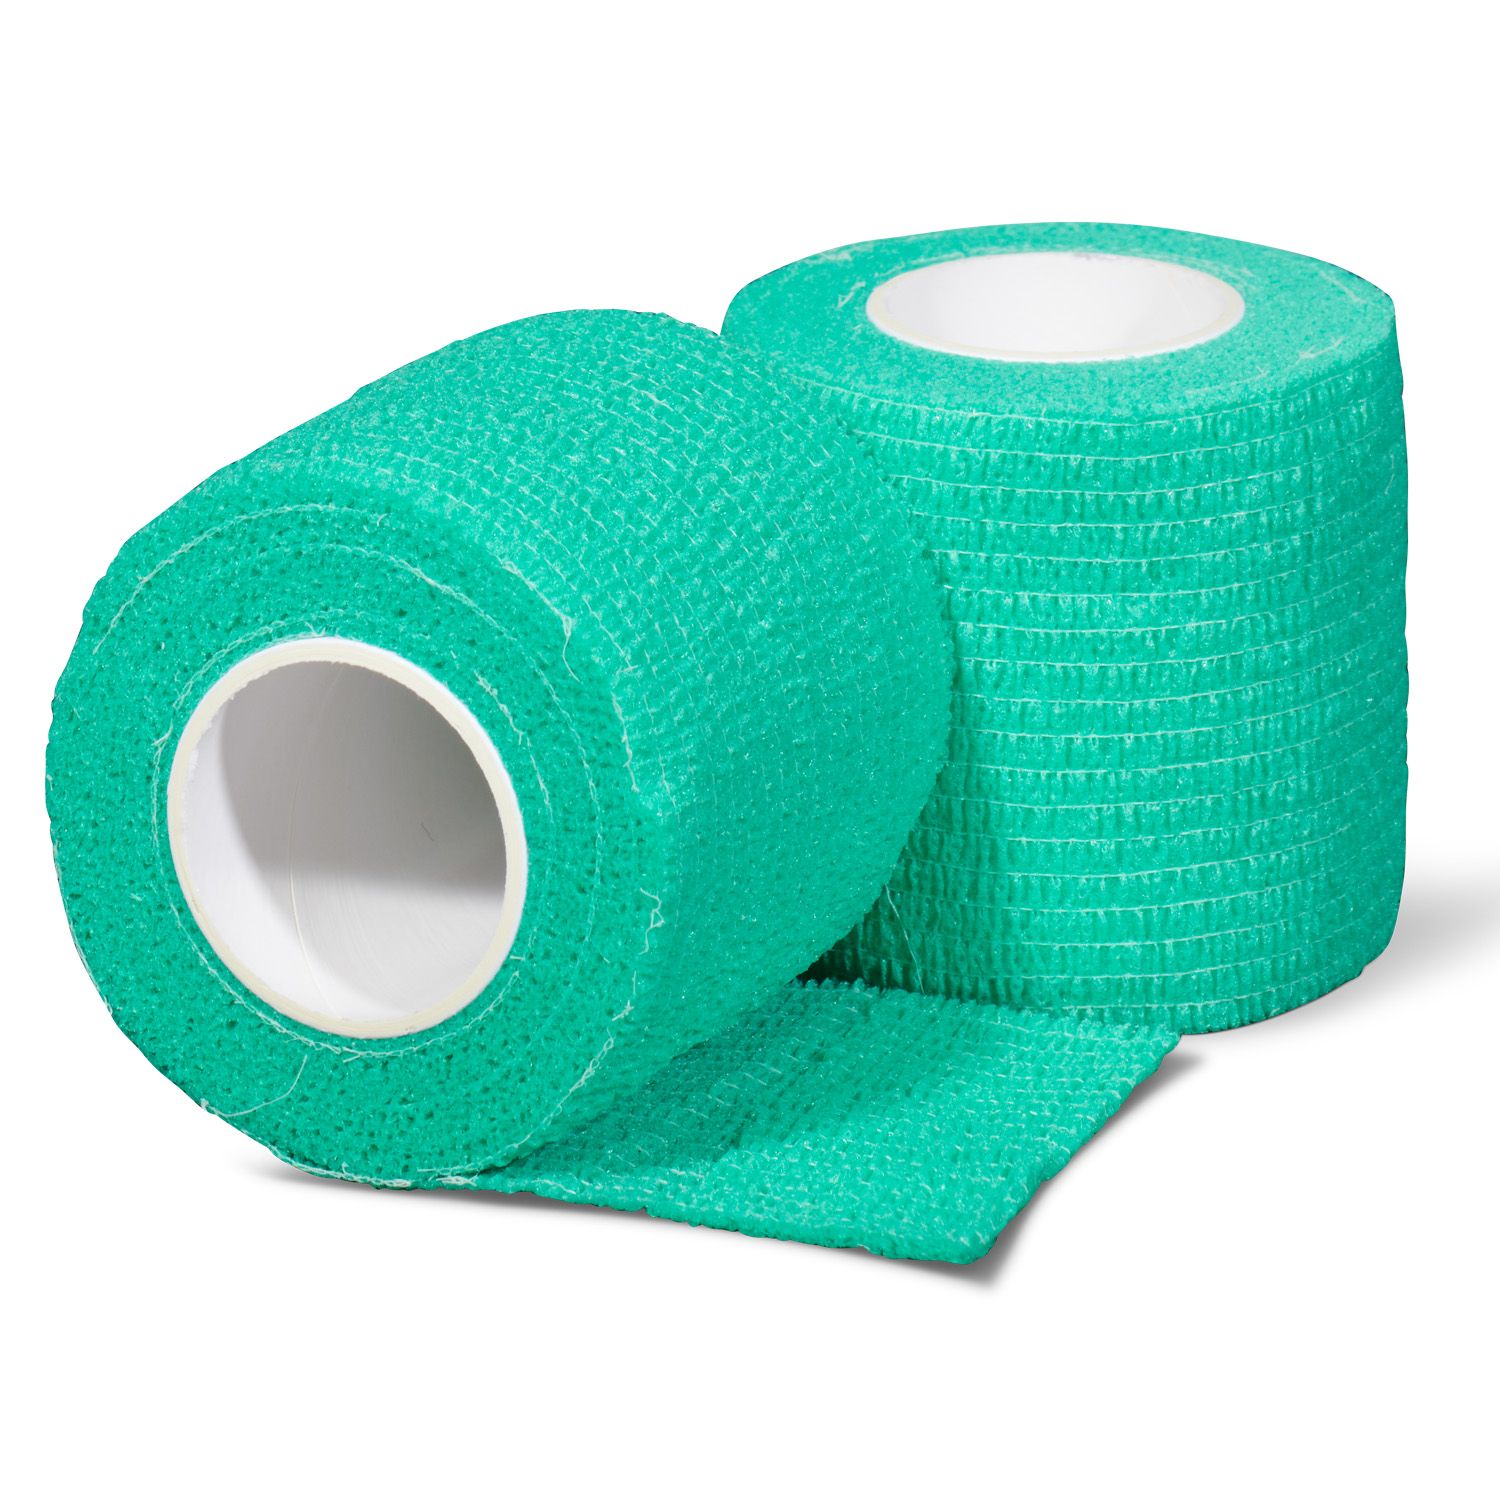 gladiator sports underwrap bandage per 20 rolls green